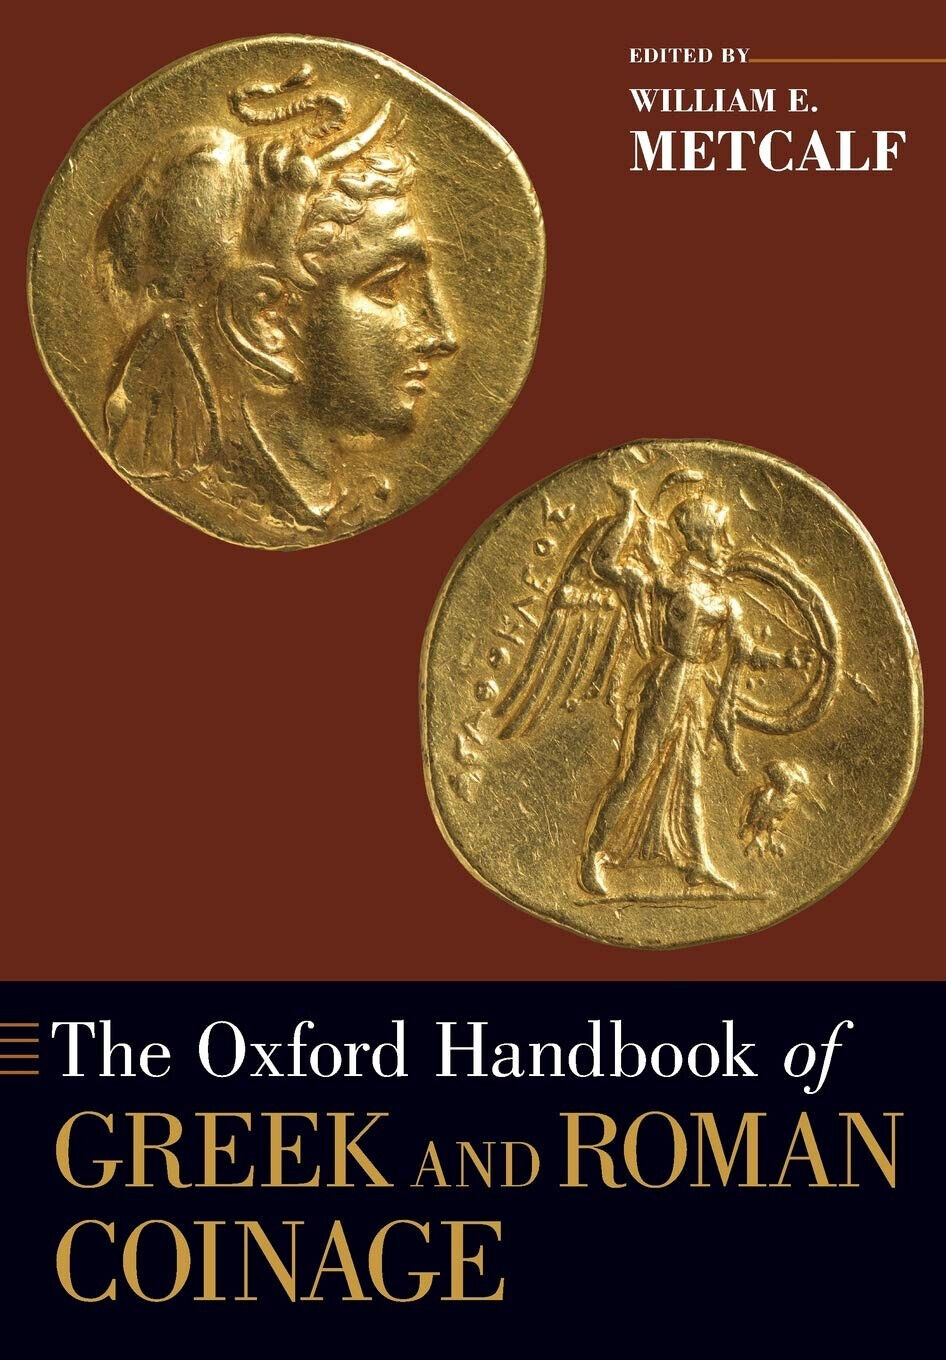 The Oxford Handbook of Greek and Roman Coinage - William E. Metcalf - 2016 libro usato